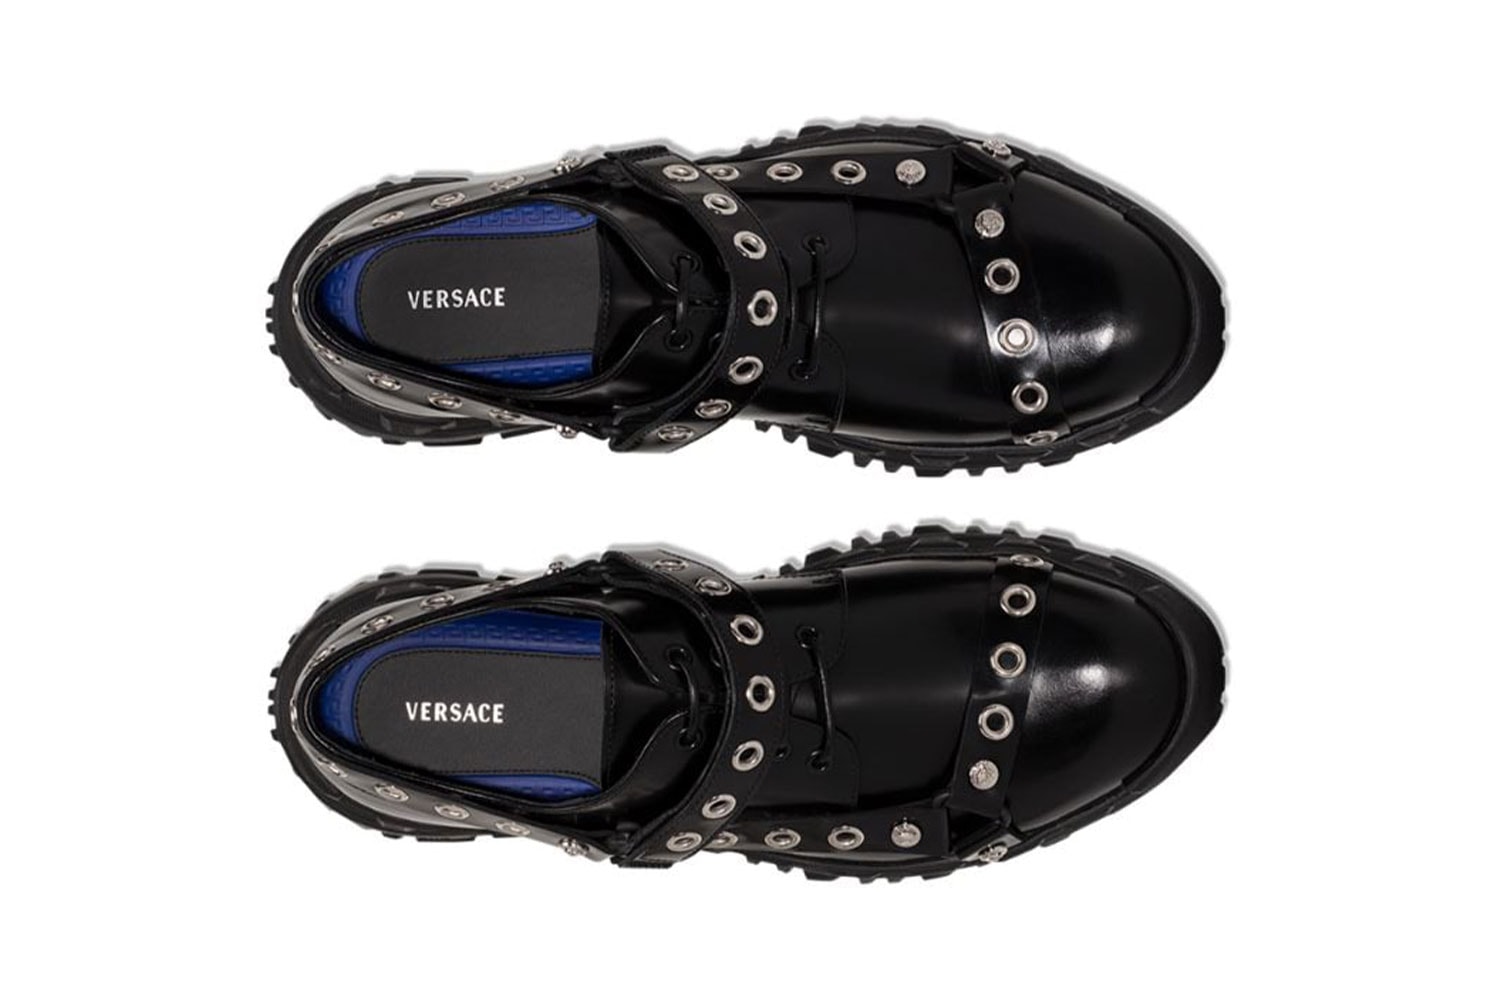 Versace Black BDSM Straps Leather Derby Shoes Drop Submits Dominates Studs Browns Fashion punk rock fetish